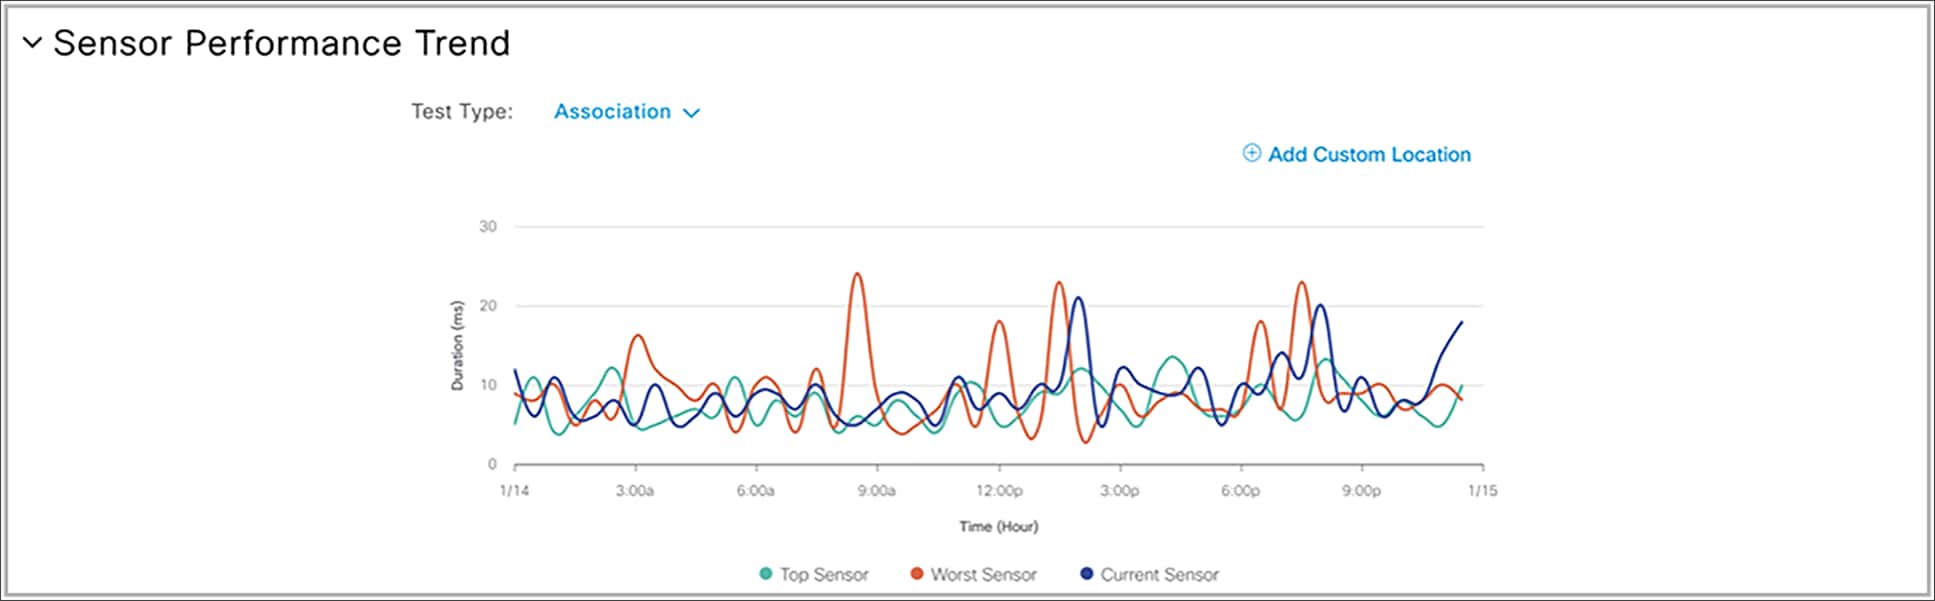 Sensor Performance Trend chart